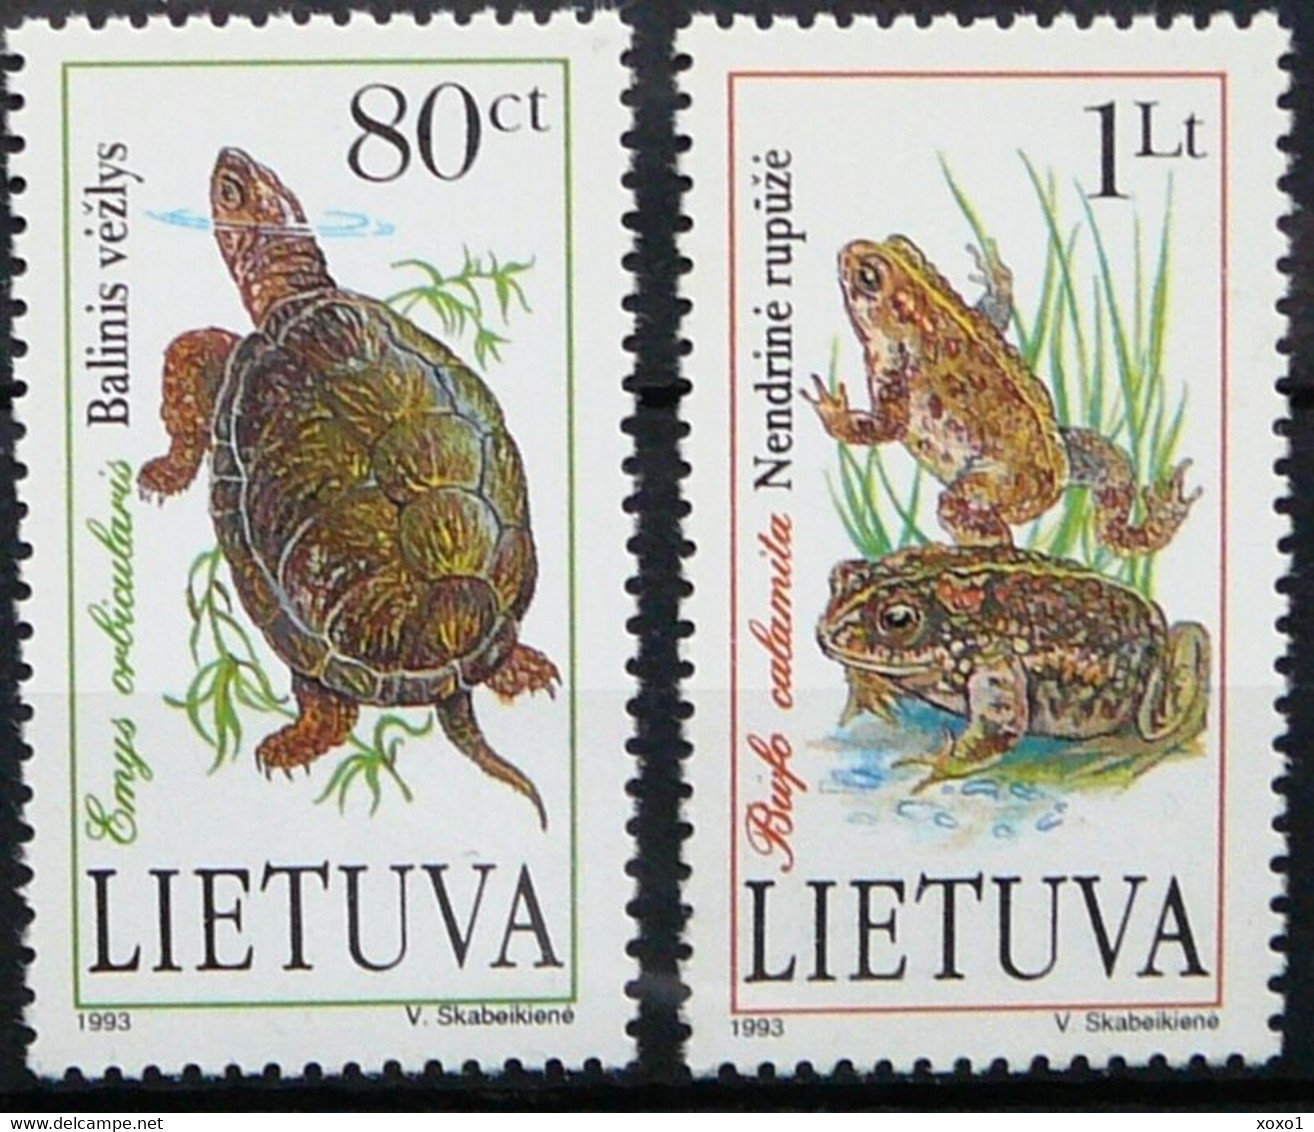 Lithuania 1993 MiNr. 545 - 546 Litauen Reptiles European Pond Turtle, Amphibians Natterjack Toad 2v MNH** 1,50 € - Turtles